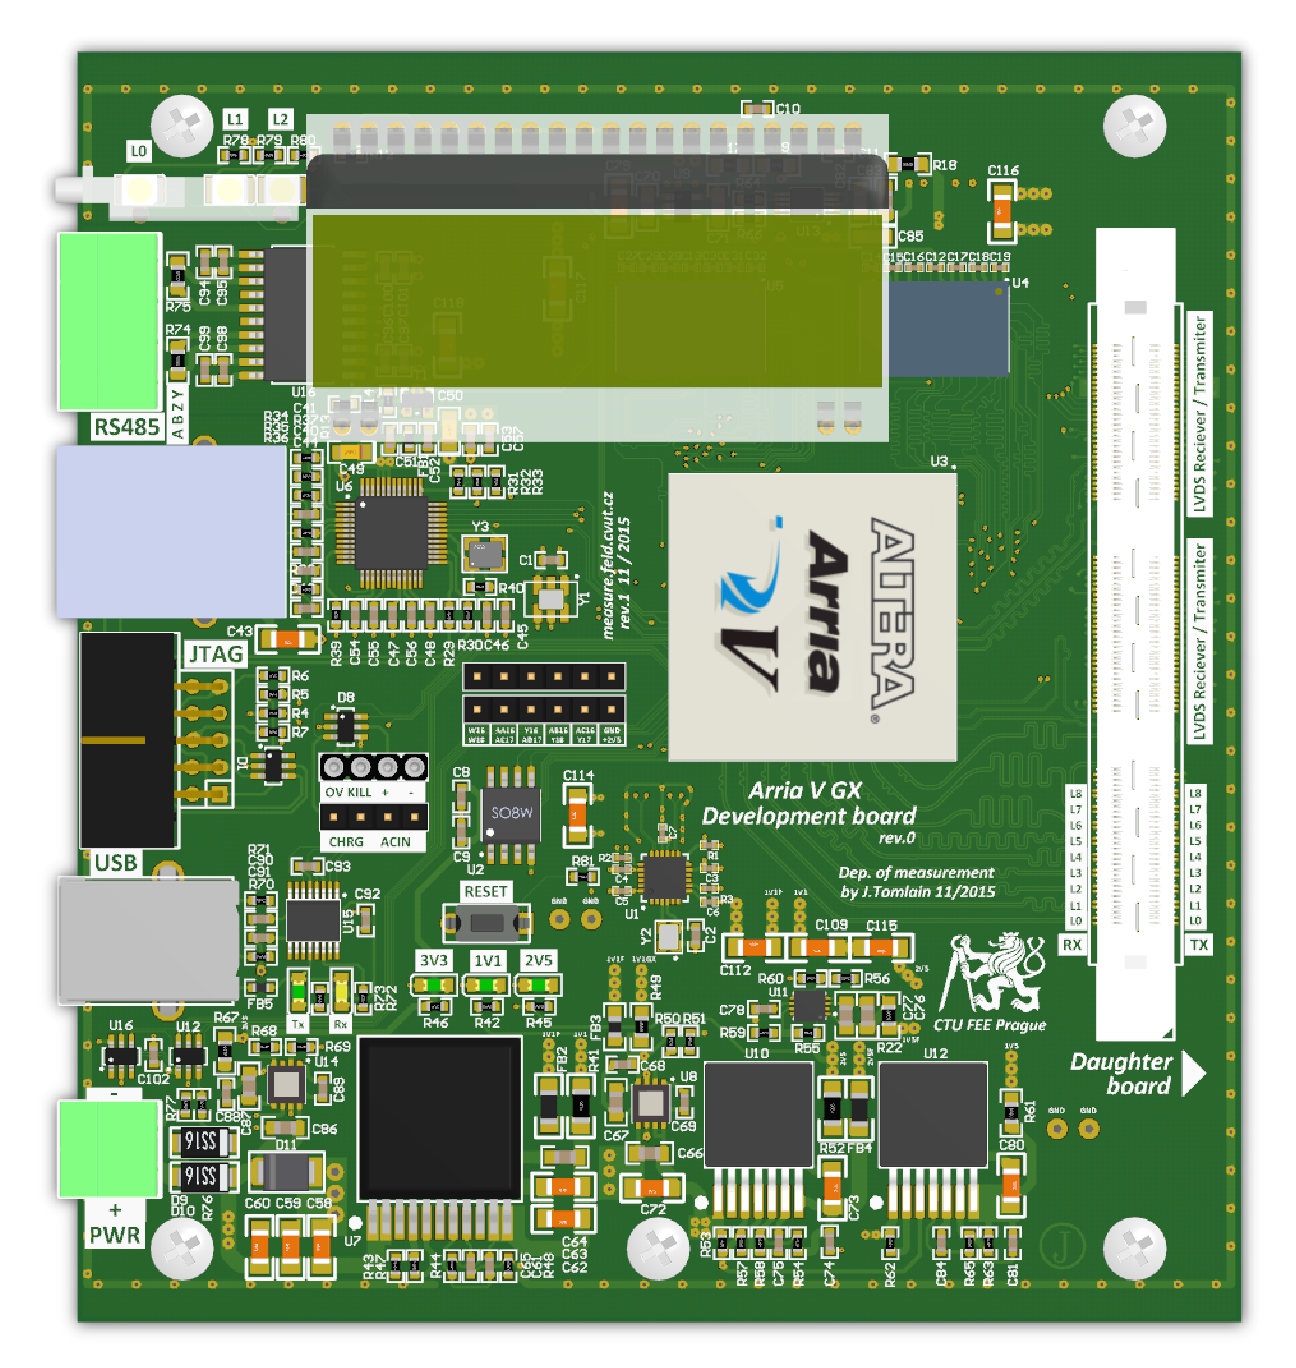 3D modle of the FPGA board